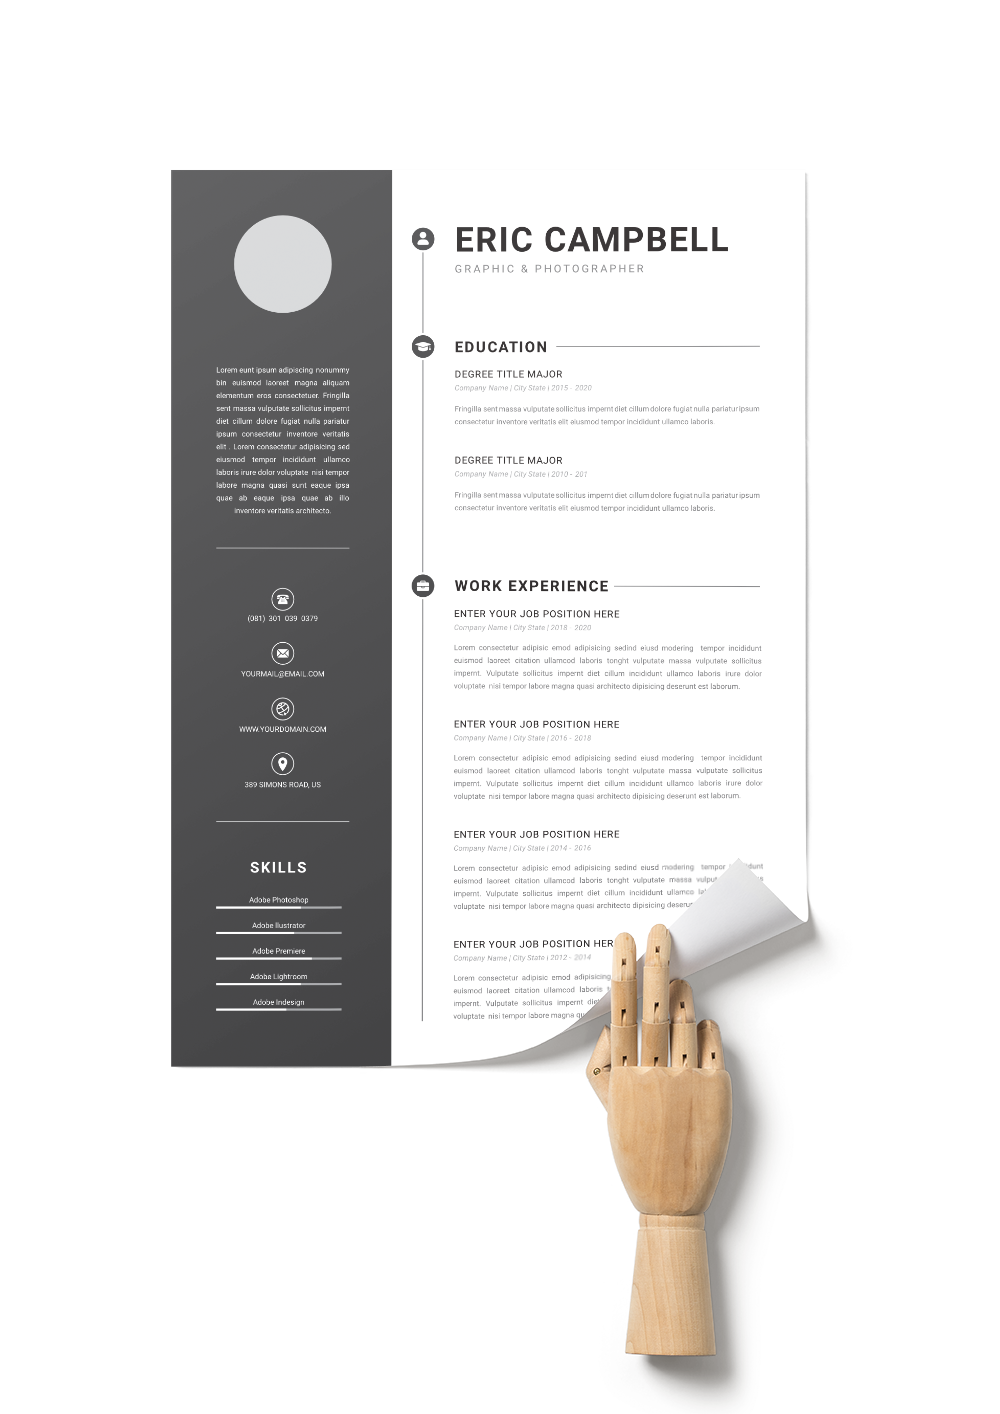 CV #72 Eric Campbell